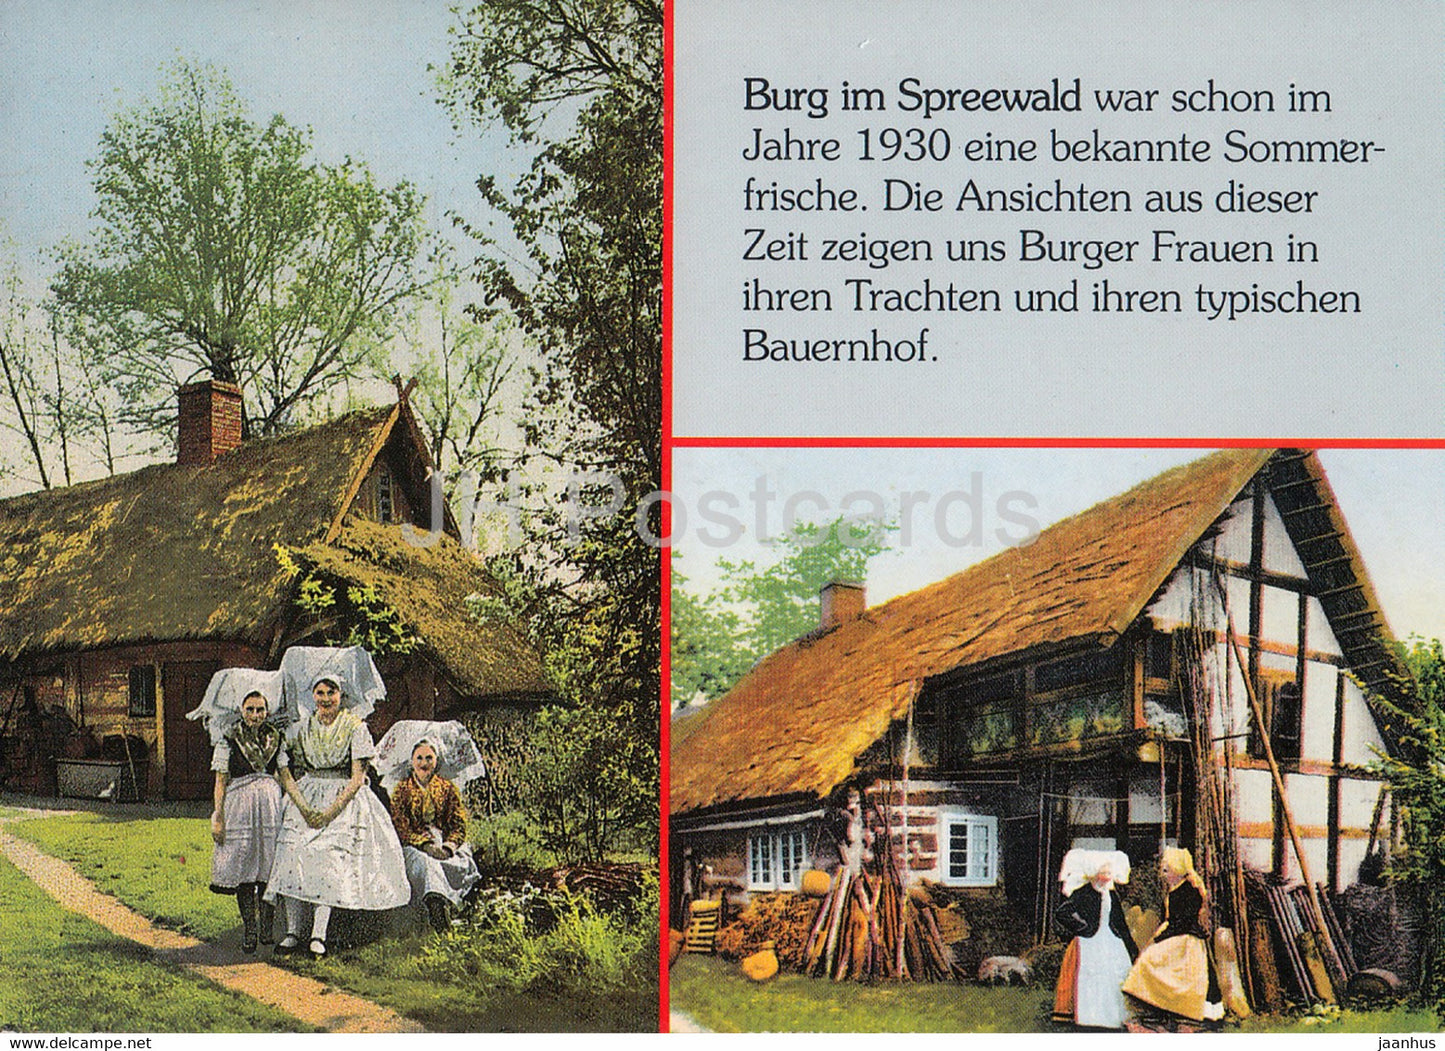 Burg im Spreewald - folk costumes - 2004 - Germany - used - JH Postcards